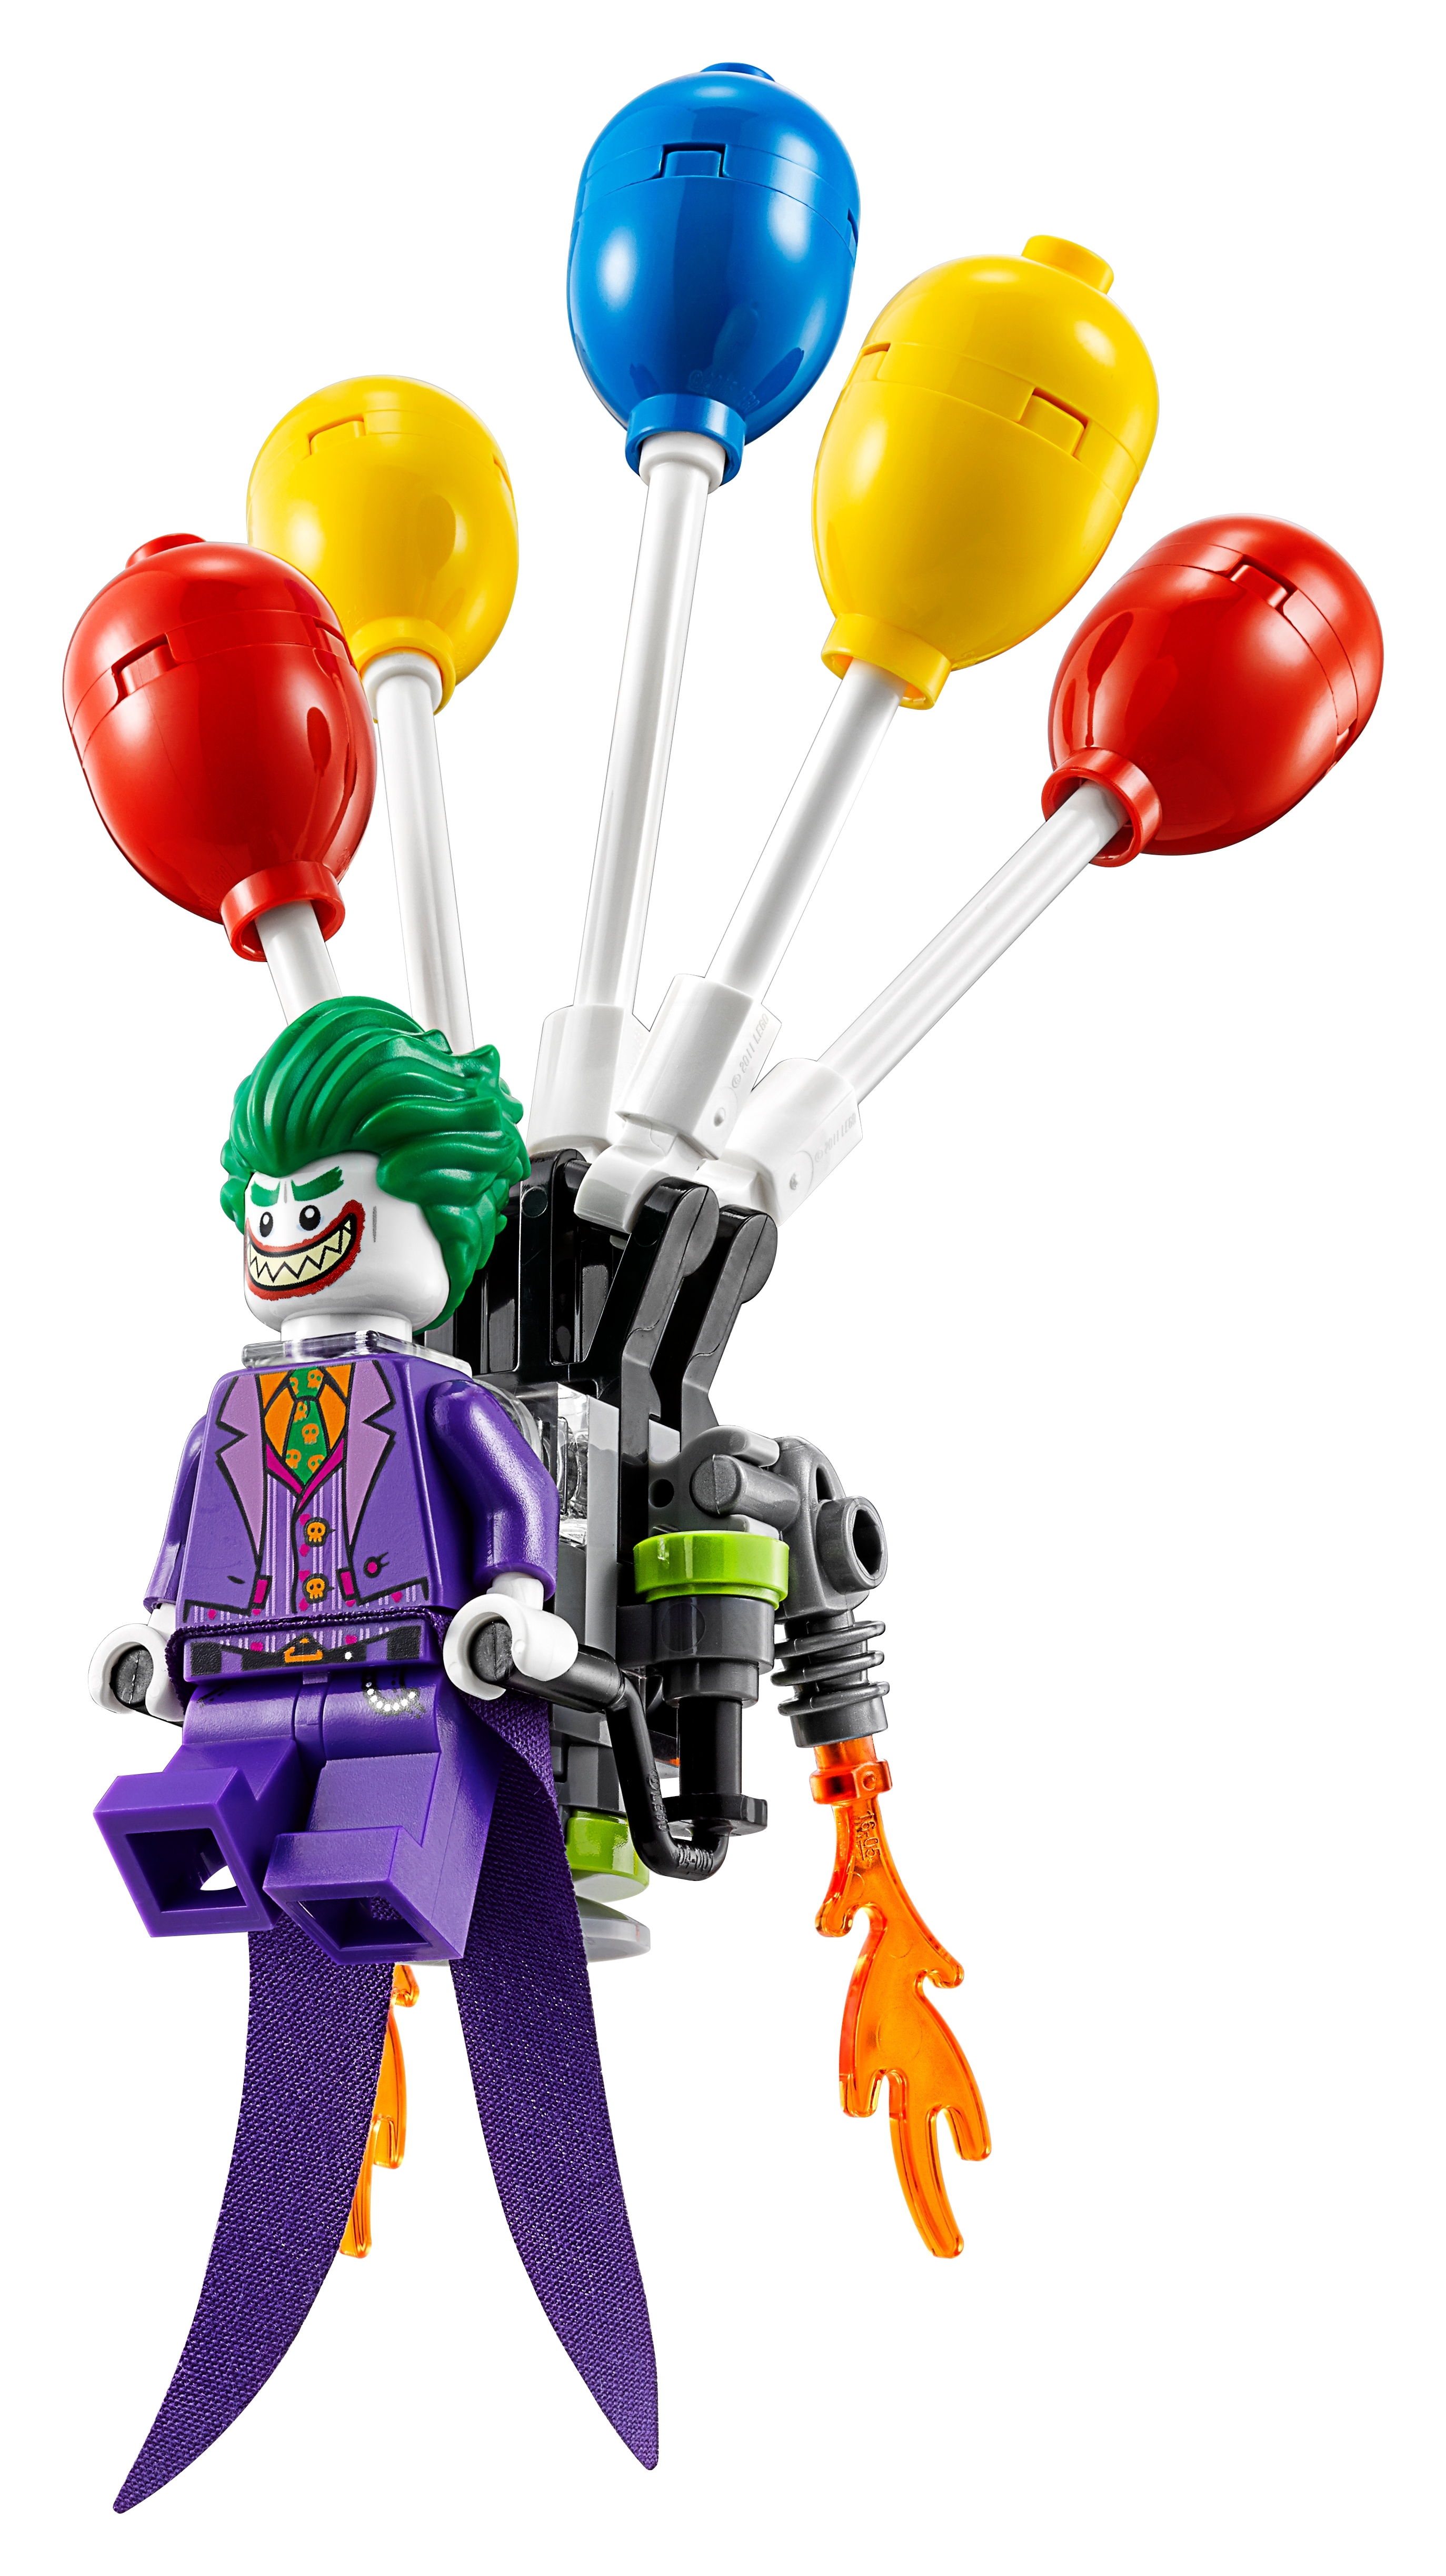 LEGO DC COMICS BATMAN MOVIE BATMAN MINIFIGURE SPLIT FROM SET 70900 